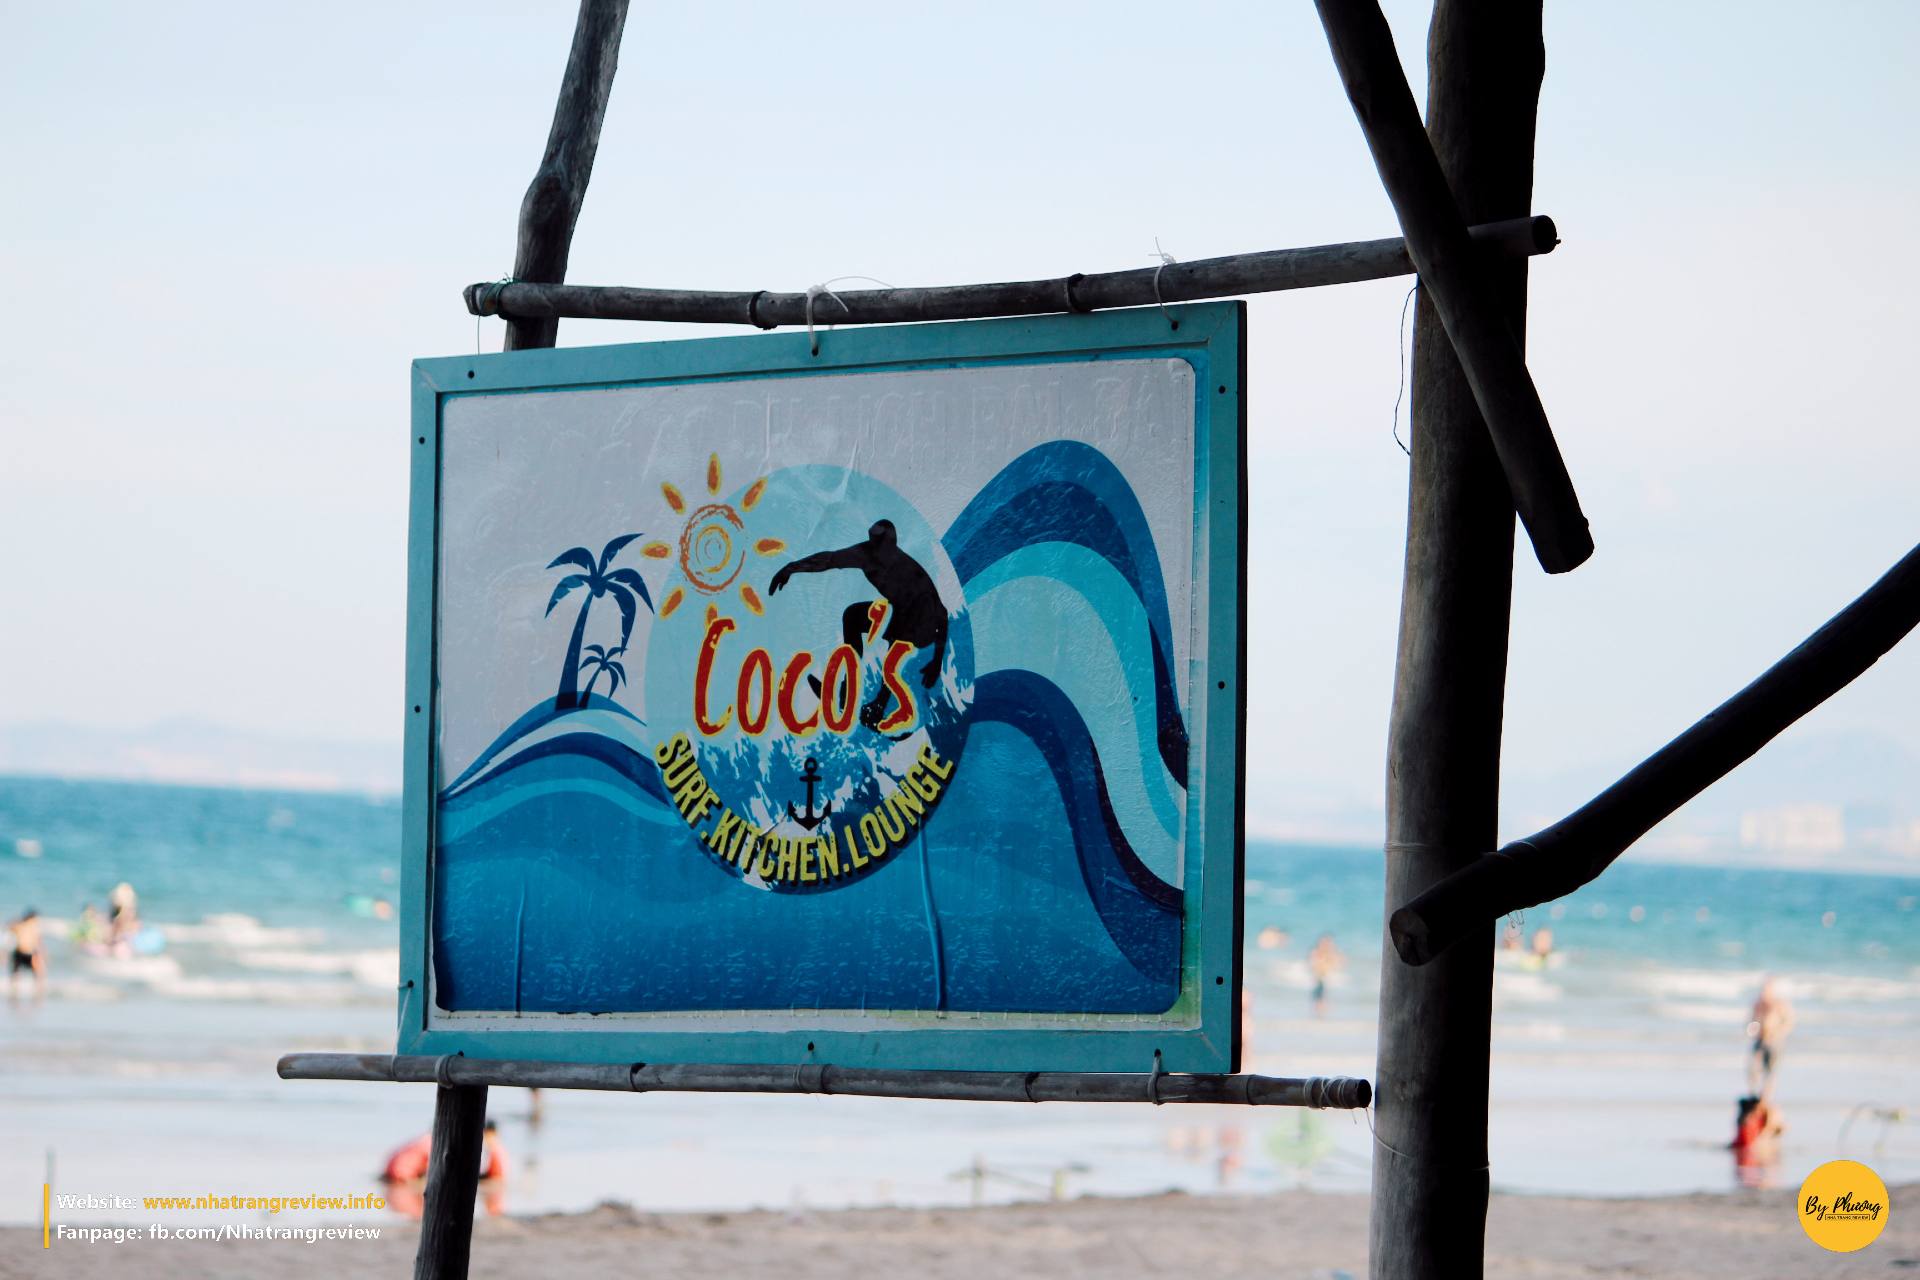 coco's surf bãi dài